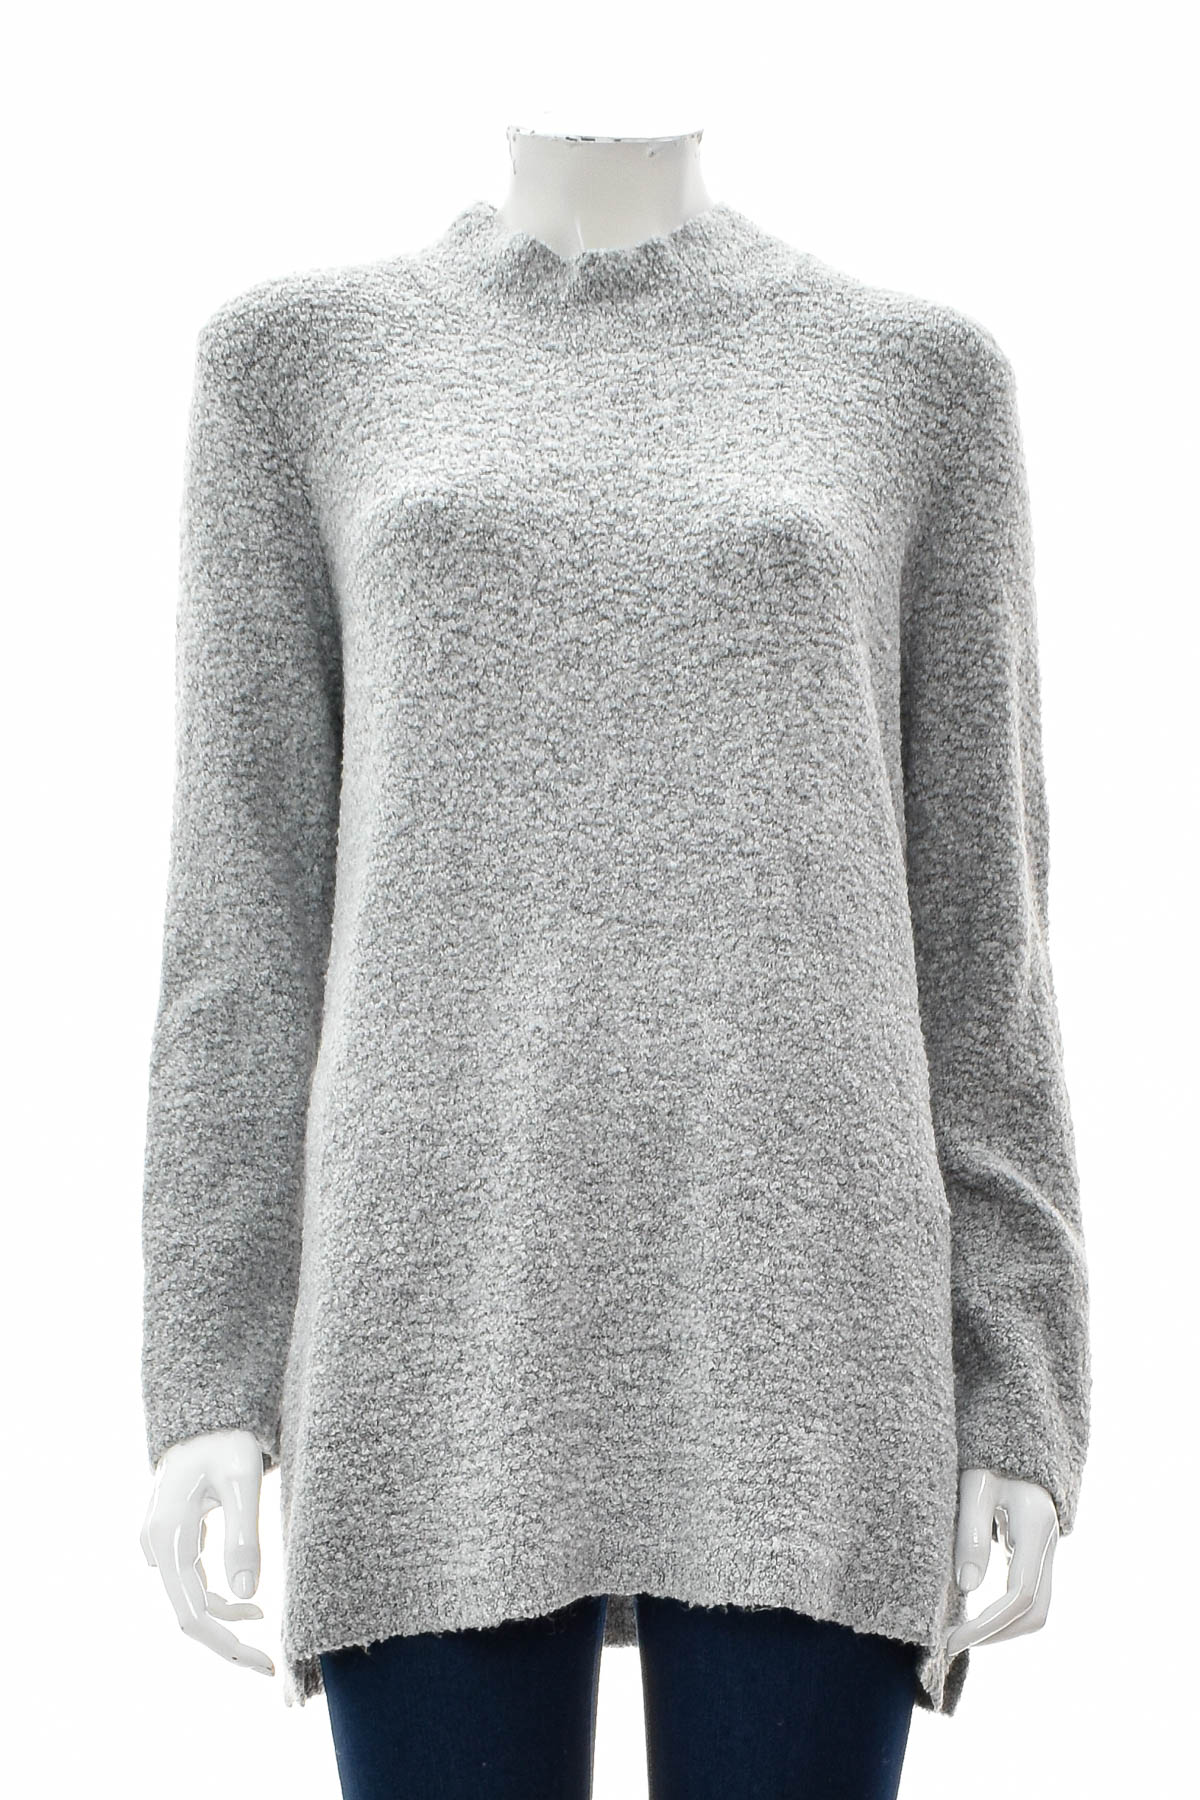 Women's sweater - Calvin Klein - 0